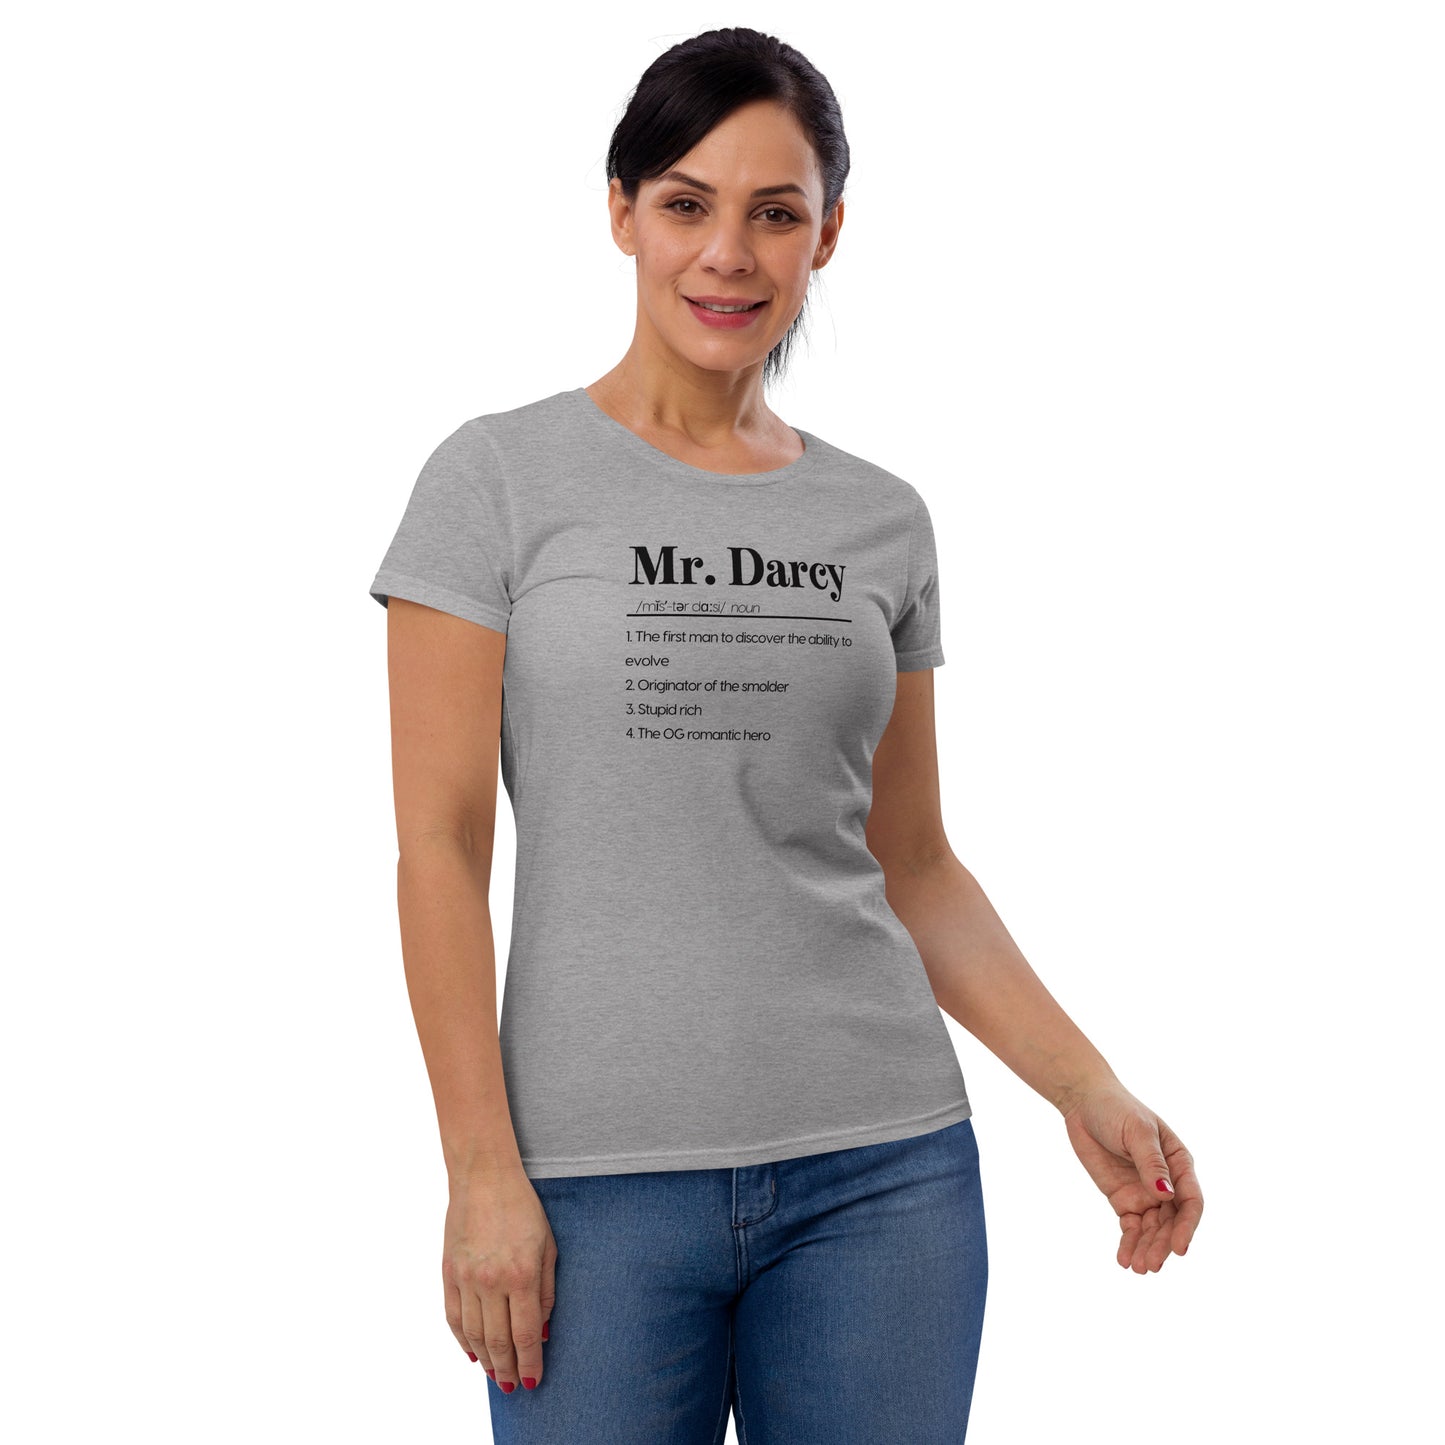 Darcy Definitions Women's short sleeve t-shirt